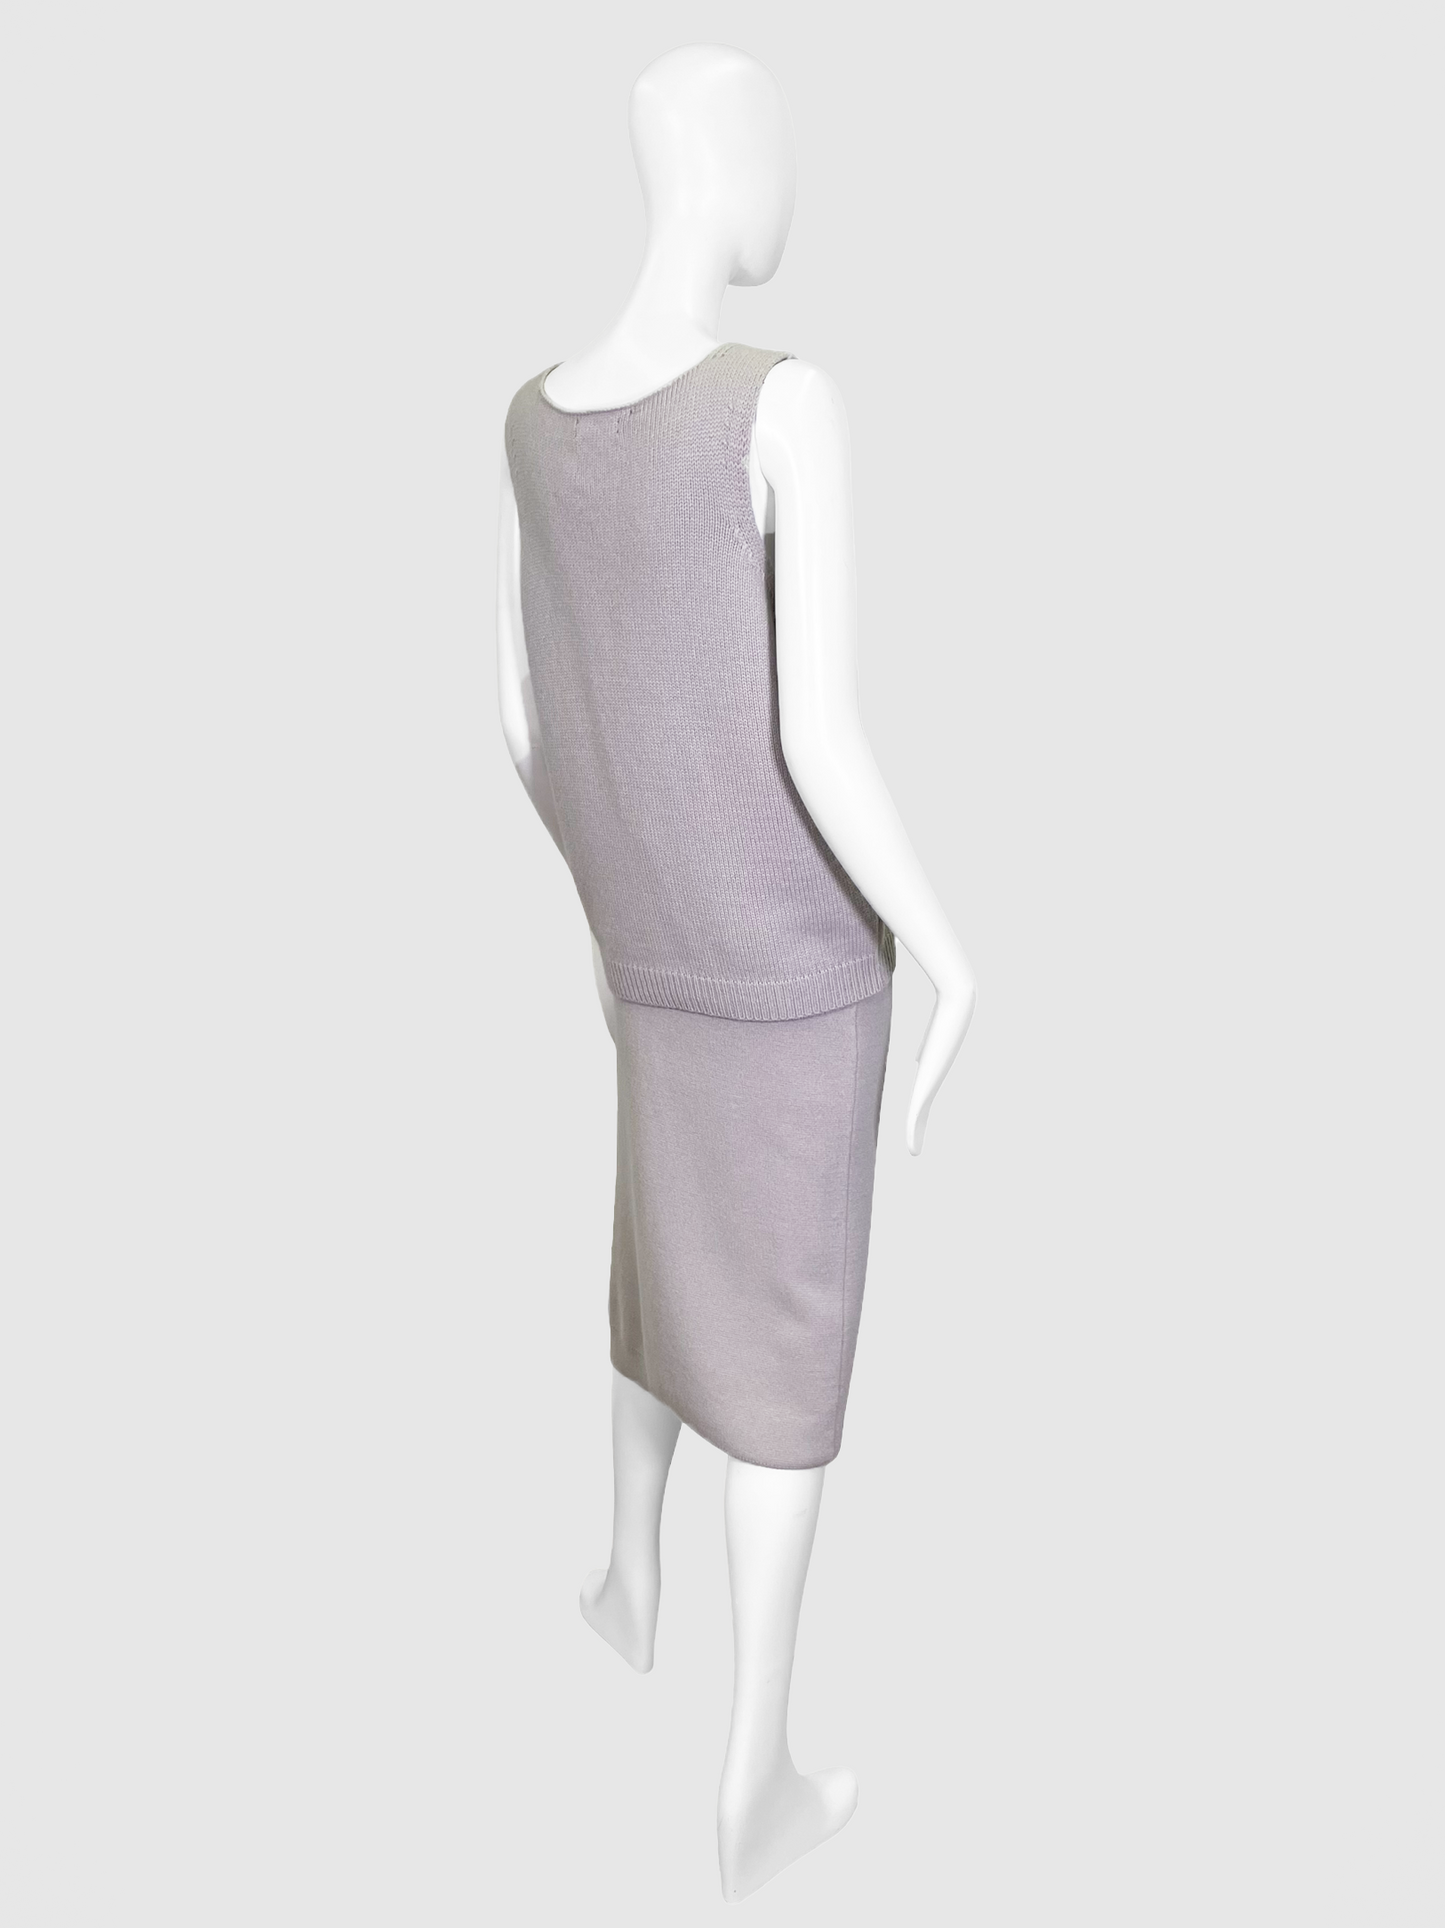 Maria Di Ripablanca Pale Tan Knitted Dress Set - Size 12